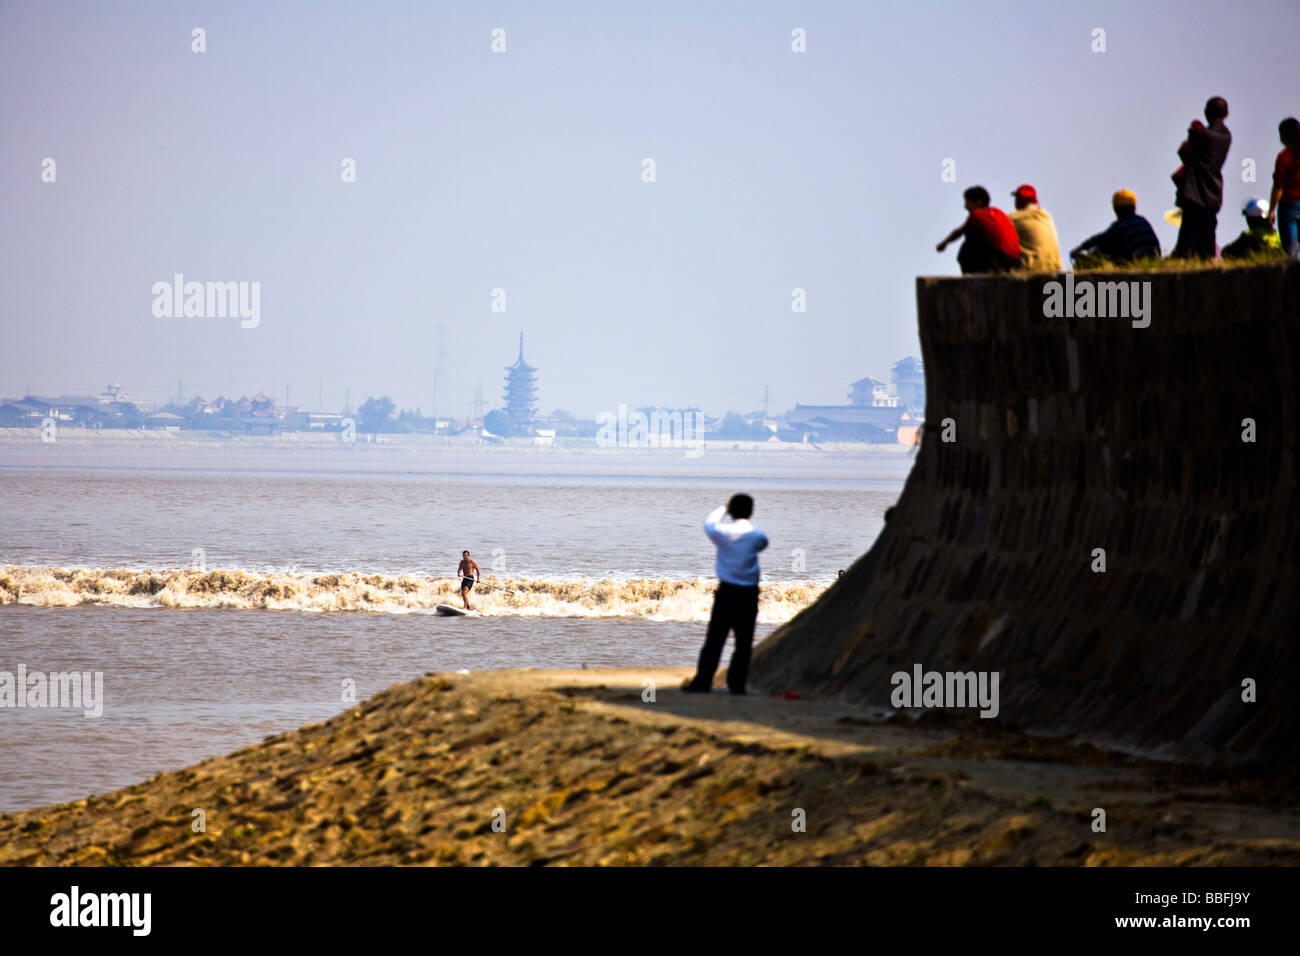 China, Zhejiang Province, Hangzhou. Qiantang River. Surfing the tidal bore, known as 'The Silver Dragon' Stock Photo